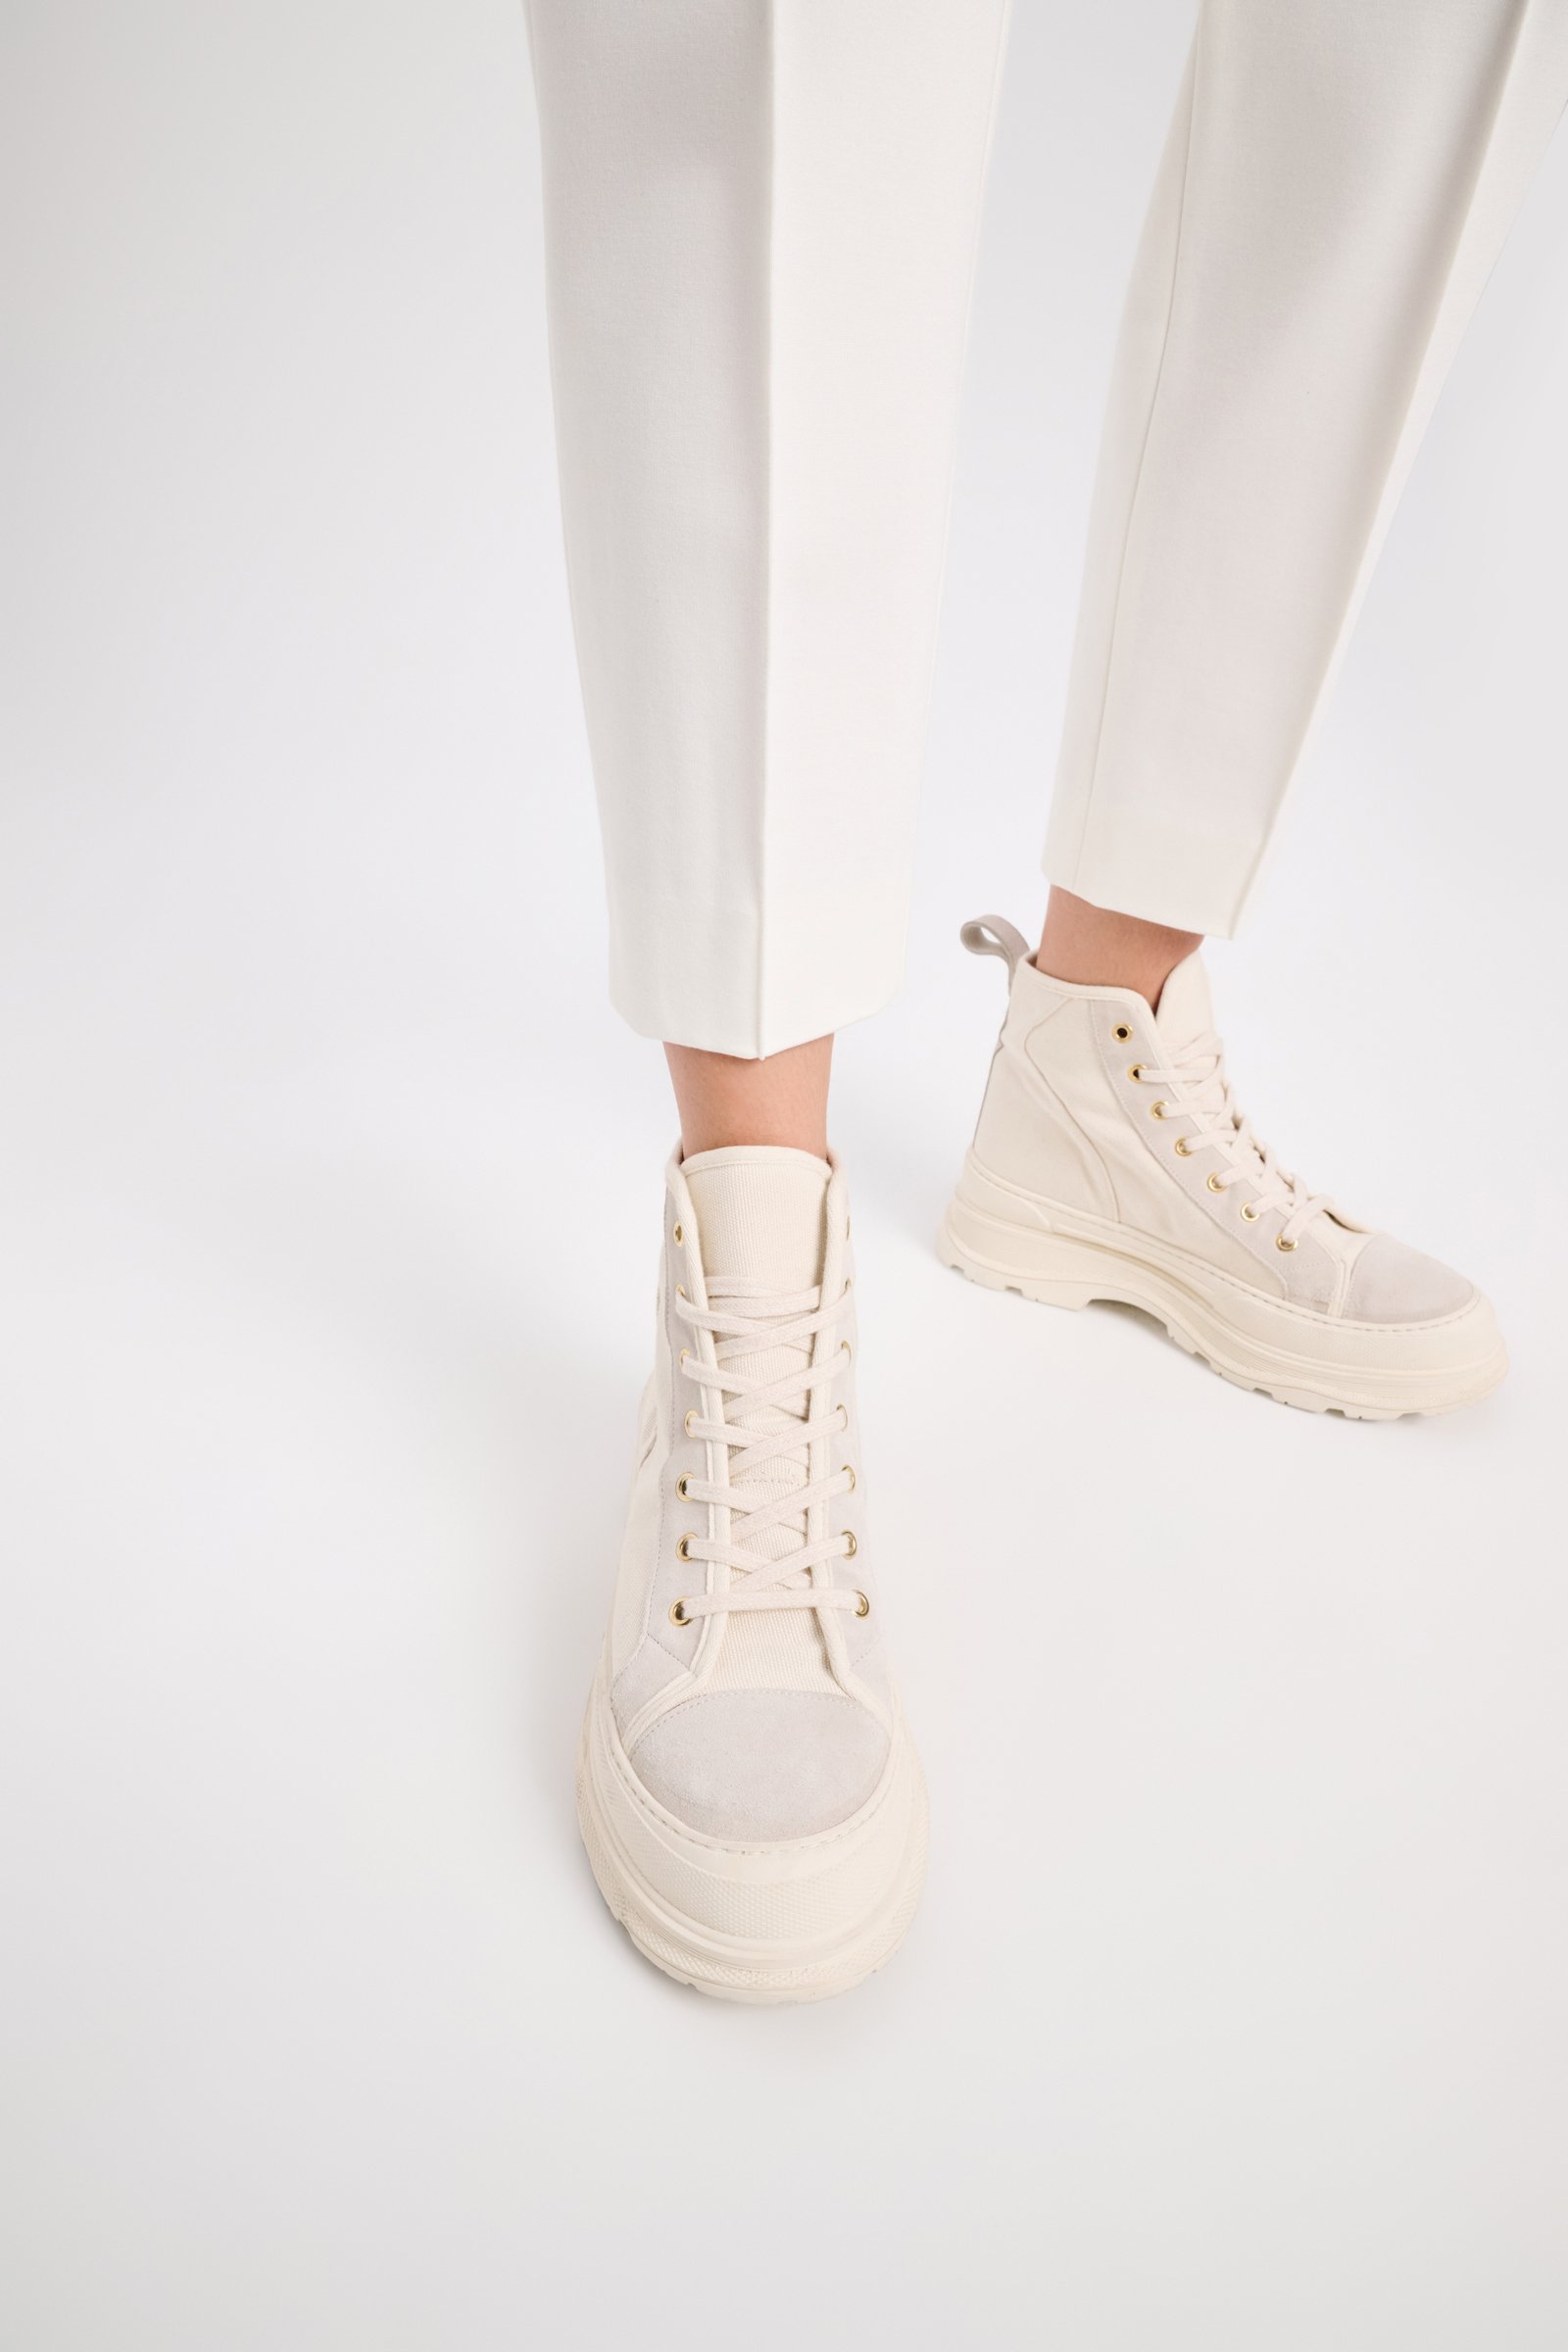 Dorothee Schumacher High-top cotton and suede sneakers cream